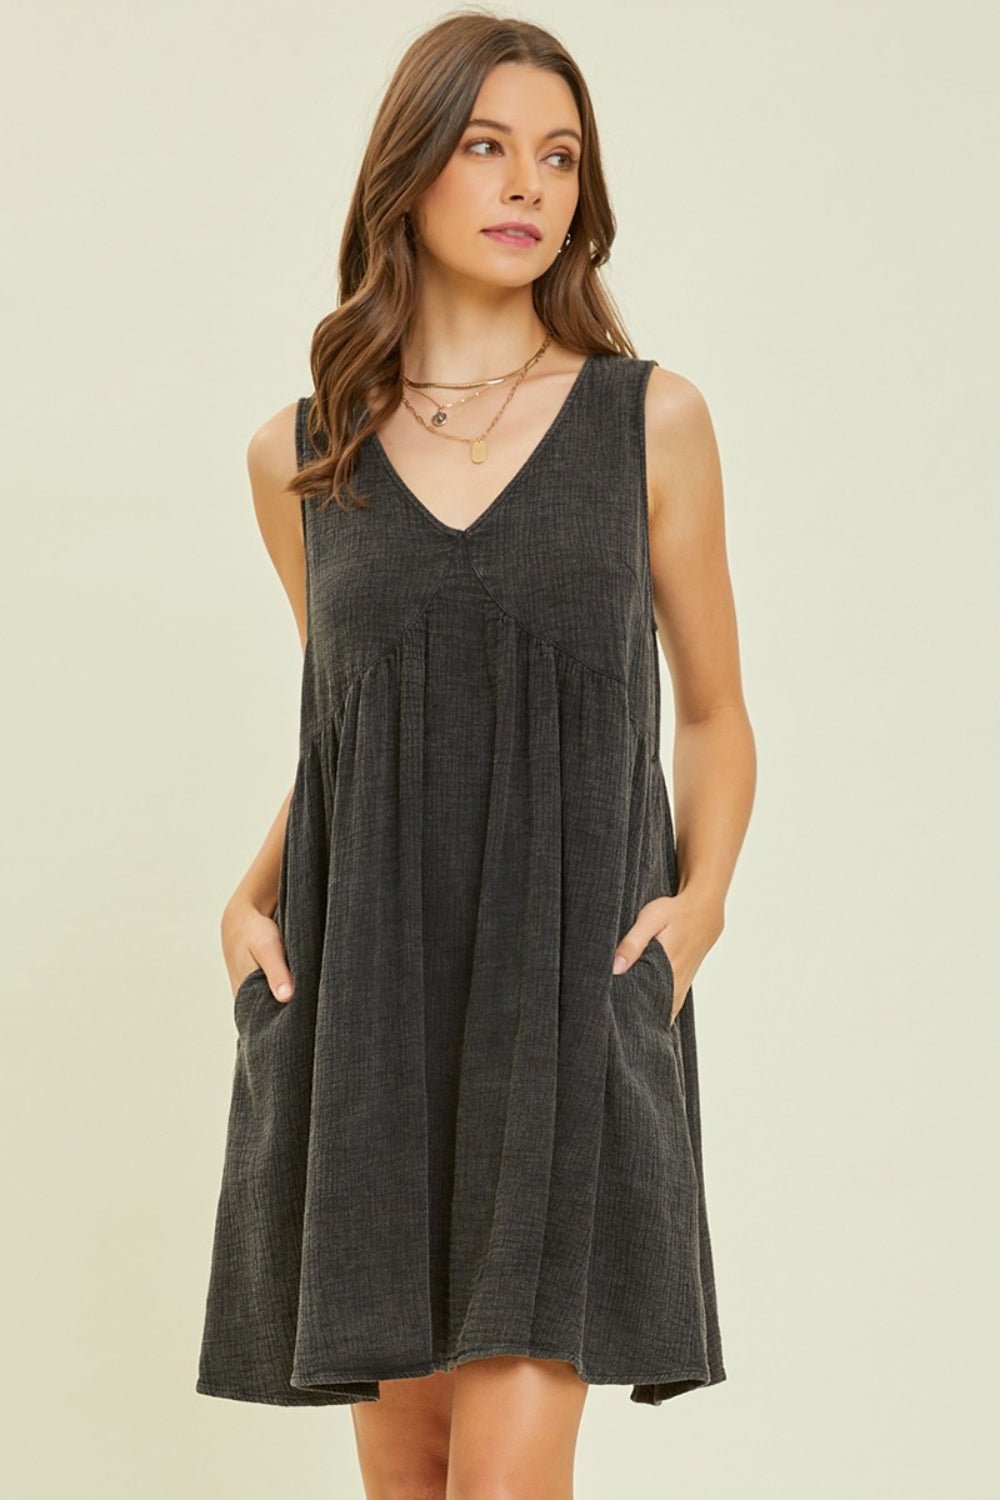 Textured Cotton Sleeveless Mini Dress in BlackMini DressHEYSON